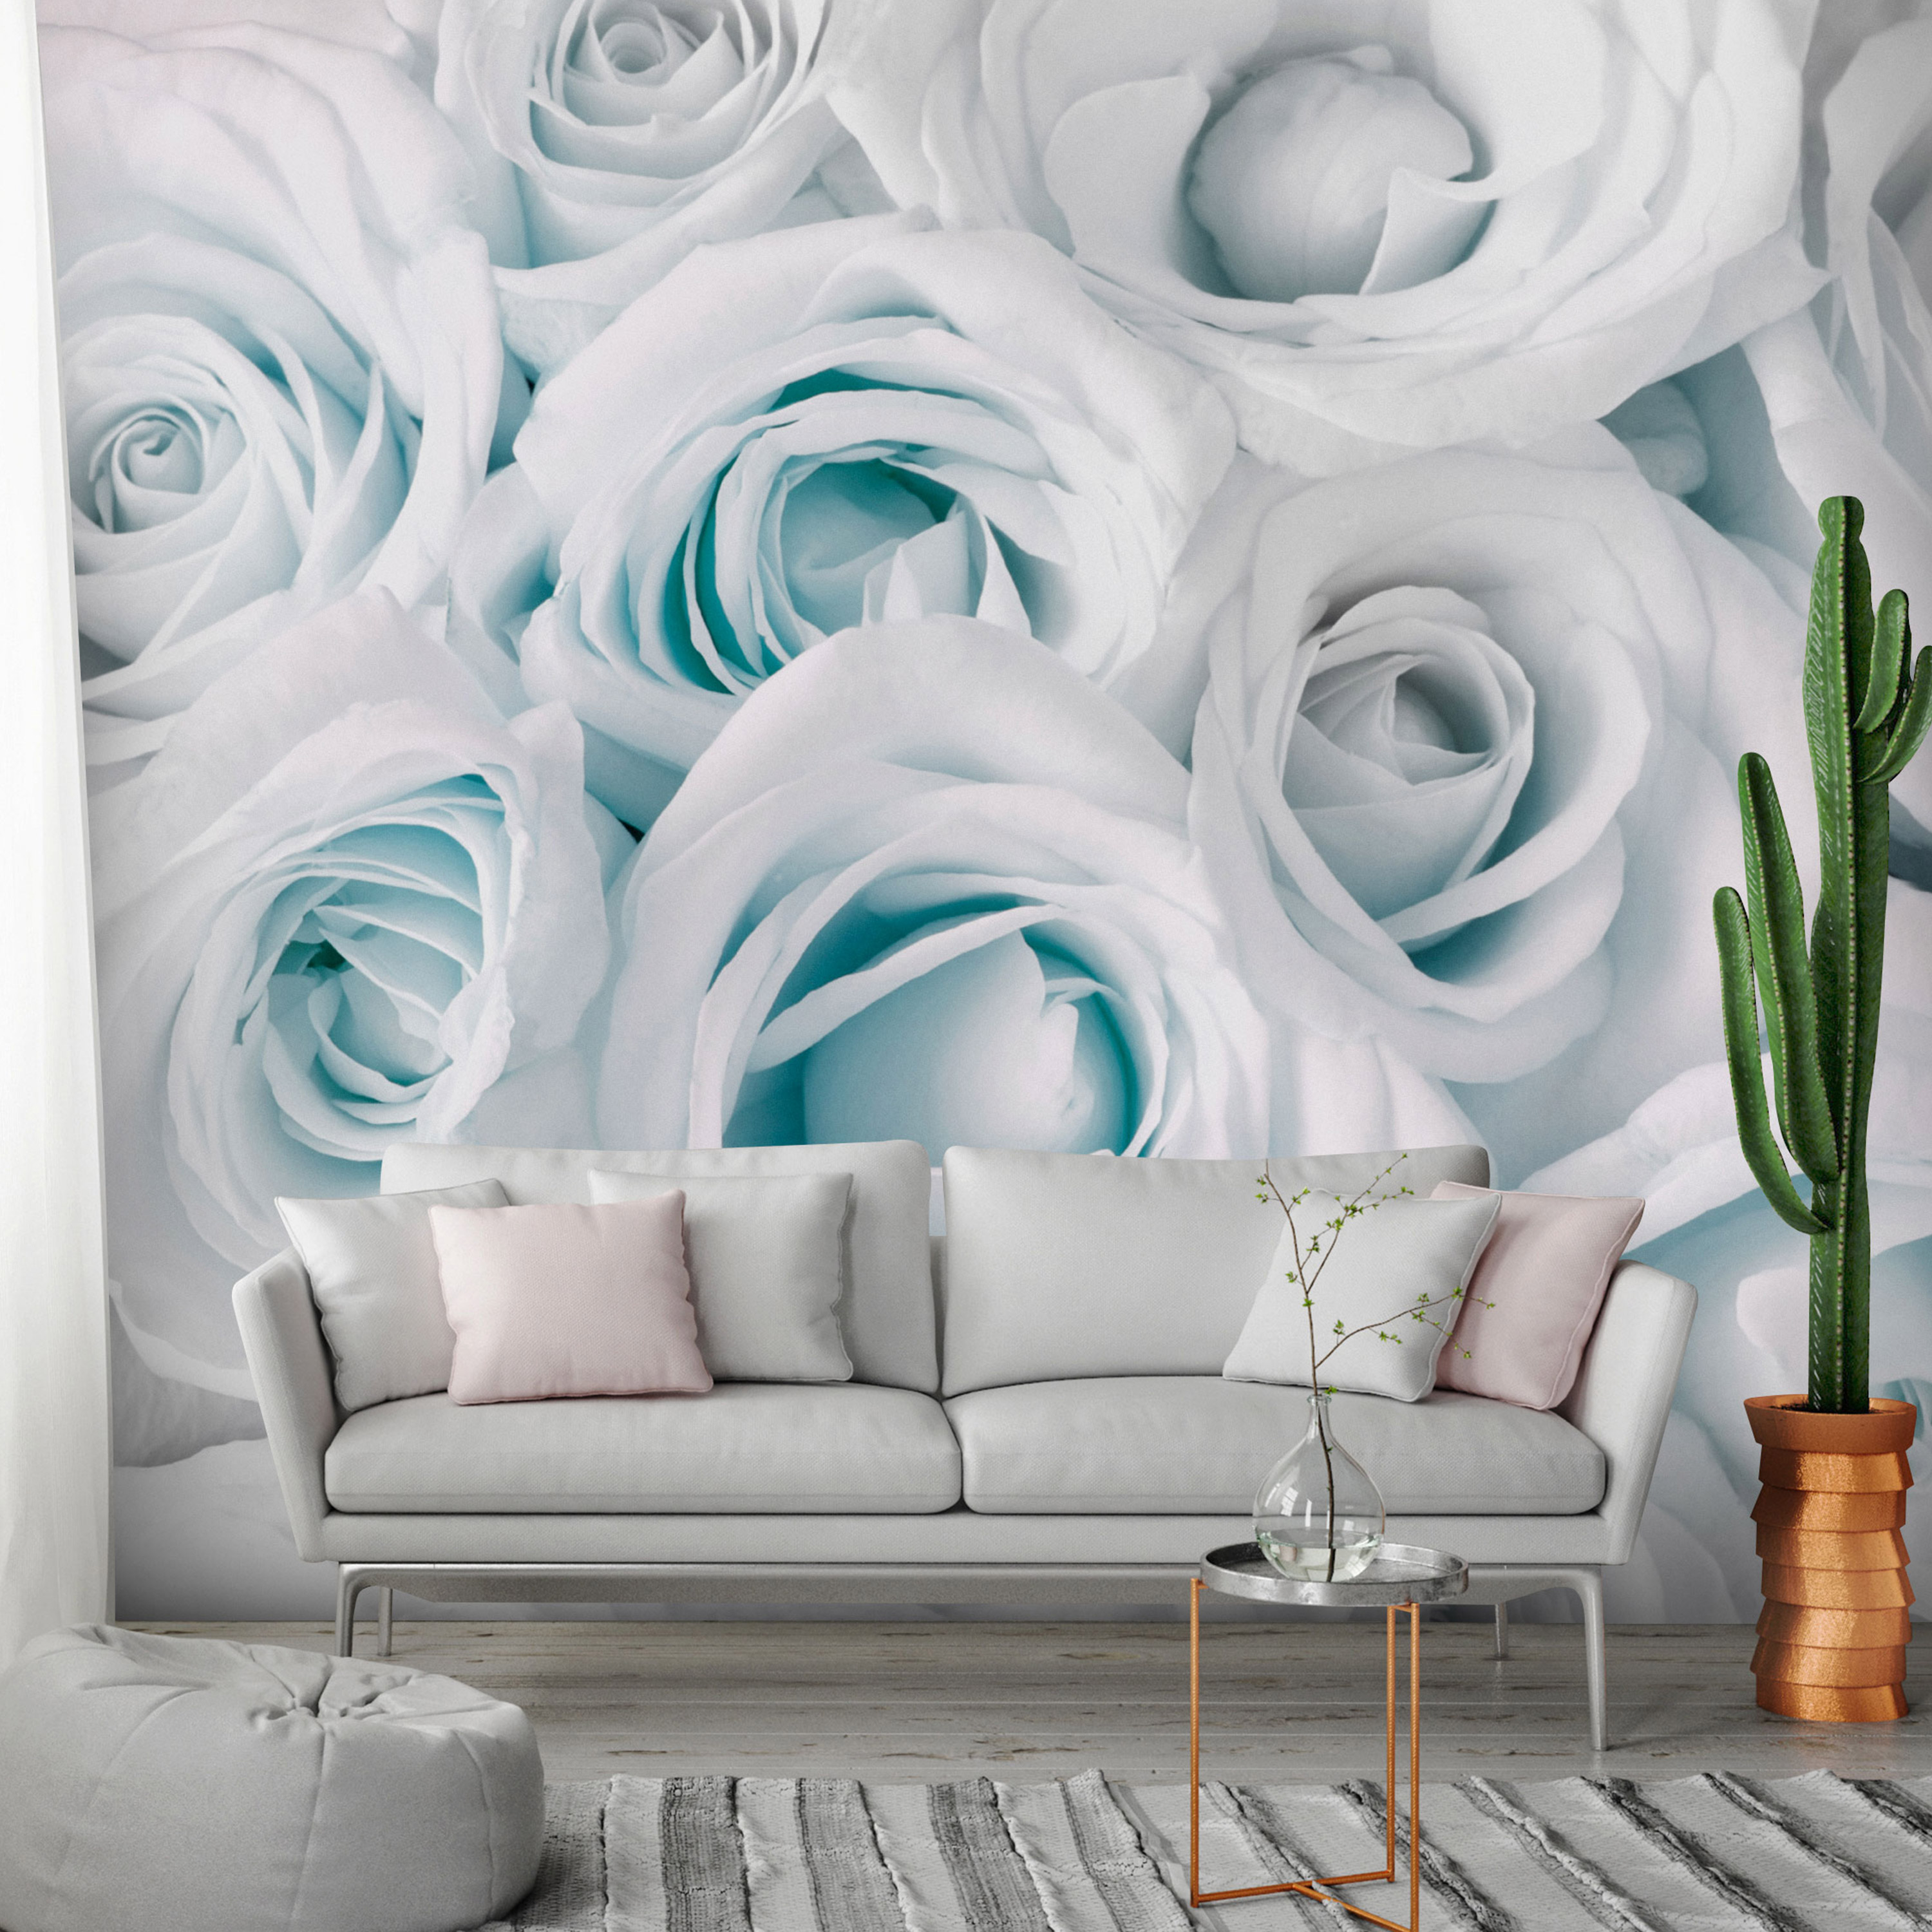 Self-adhesive Wallpaper - Satin Rose (Turquoise) - 392x280